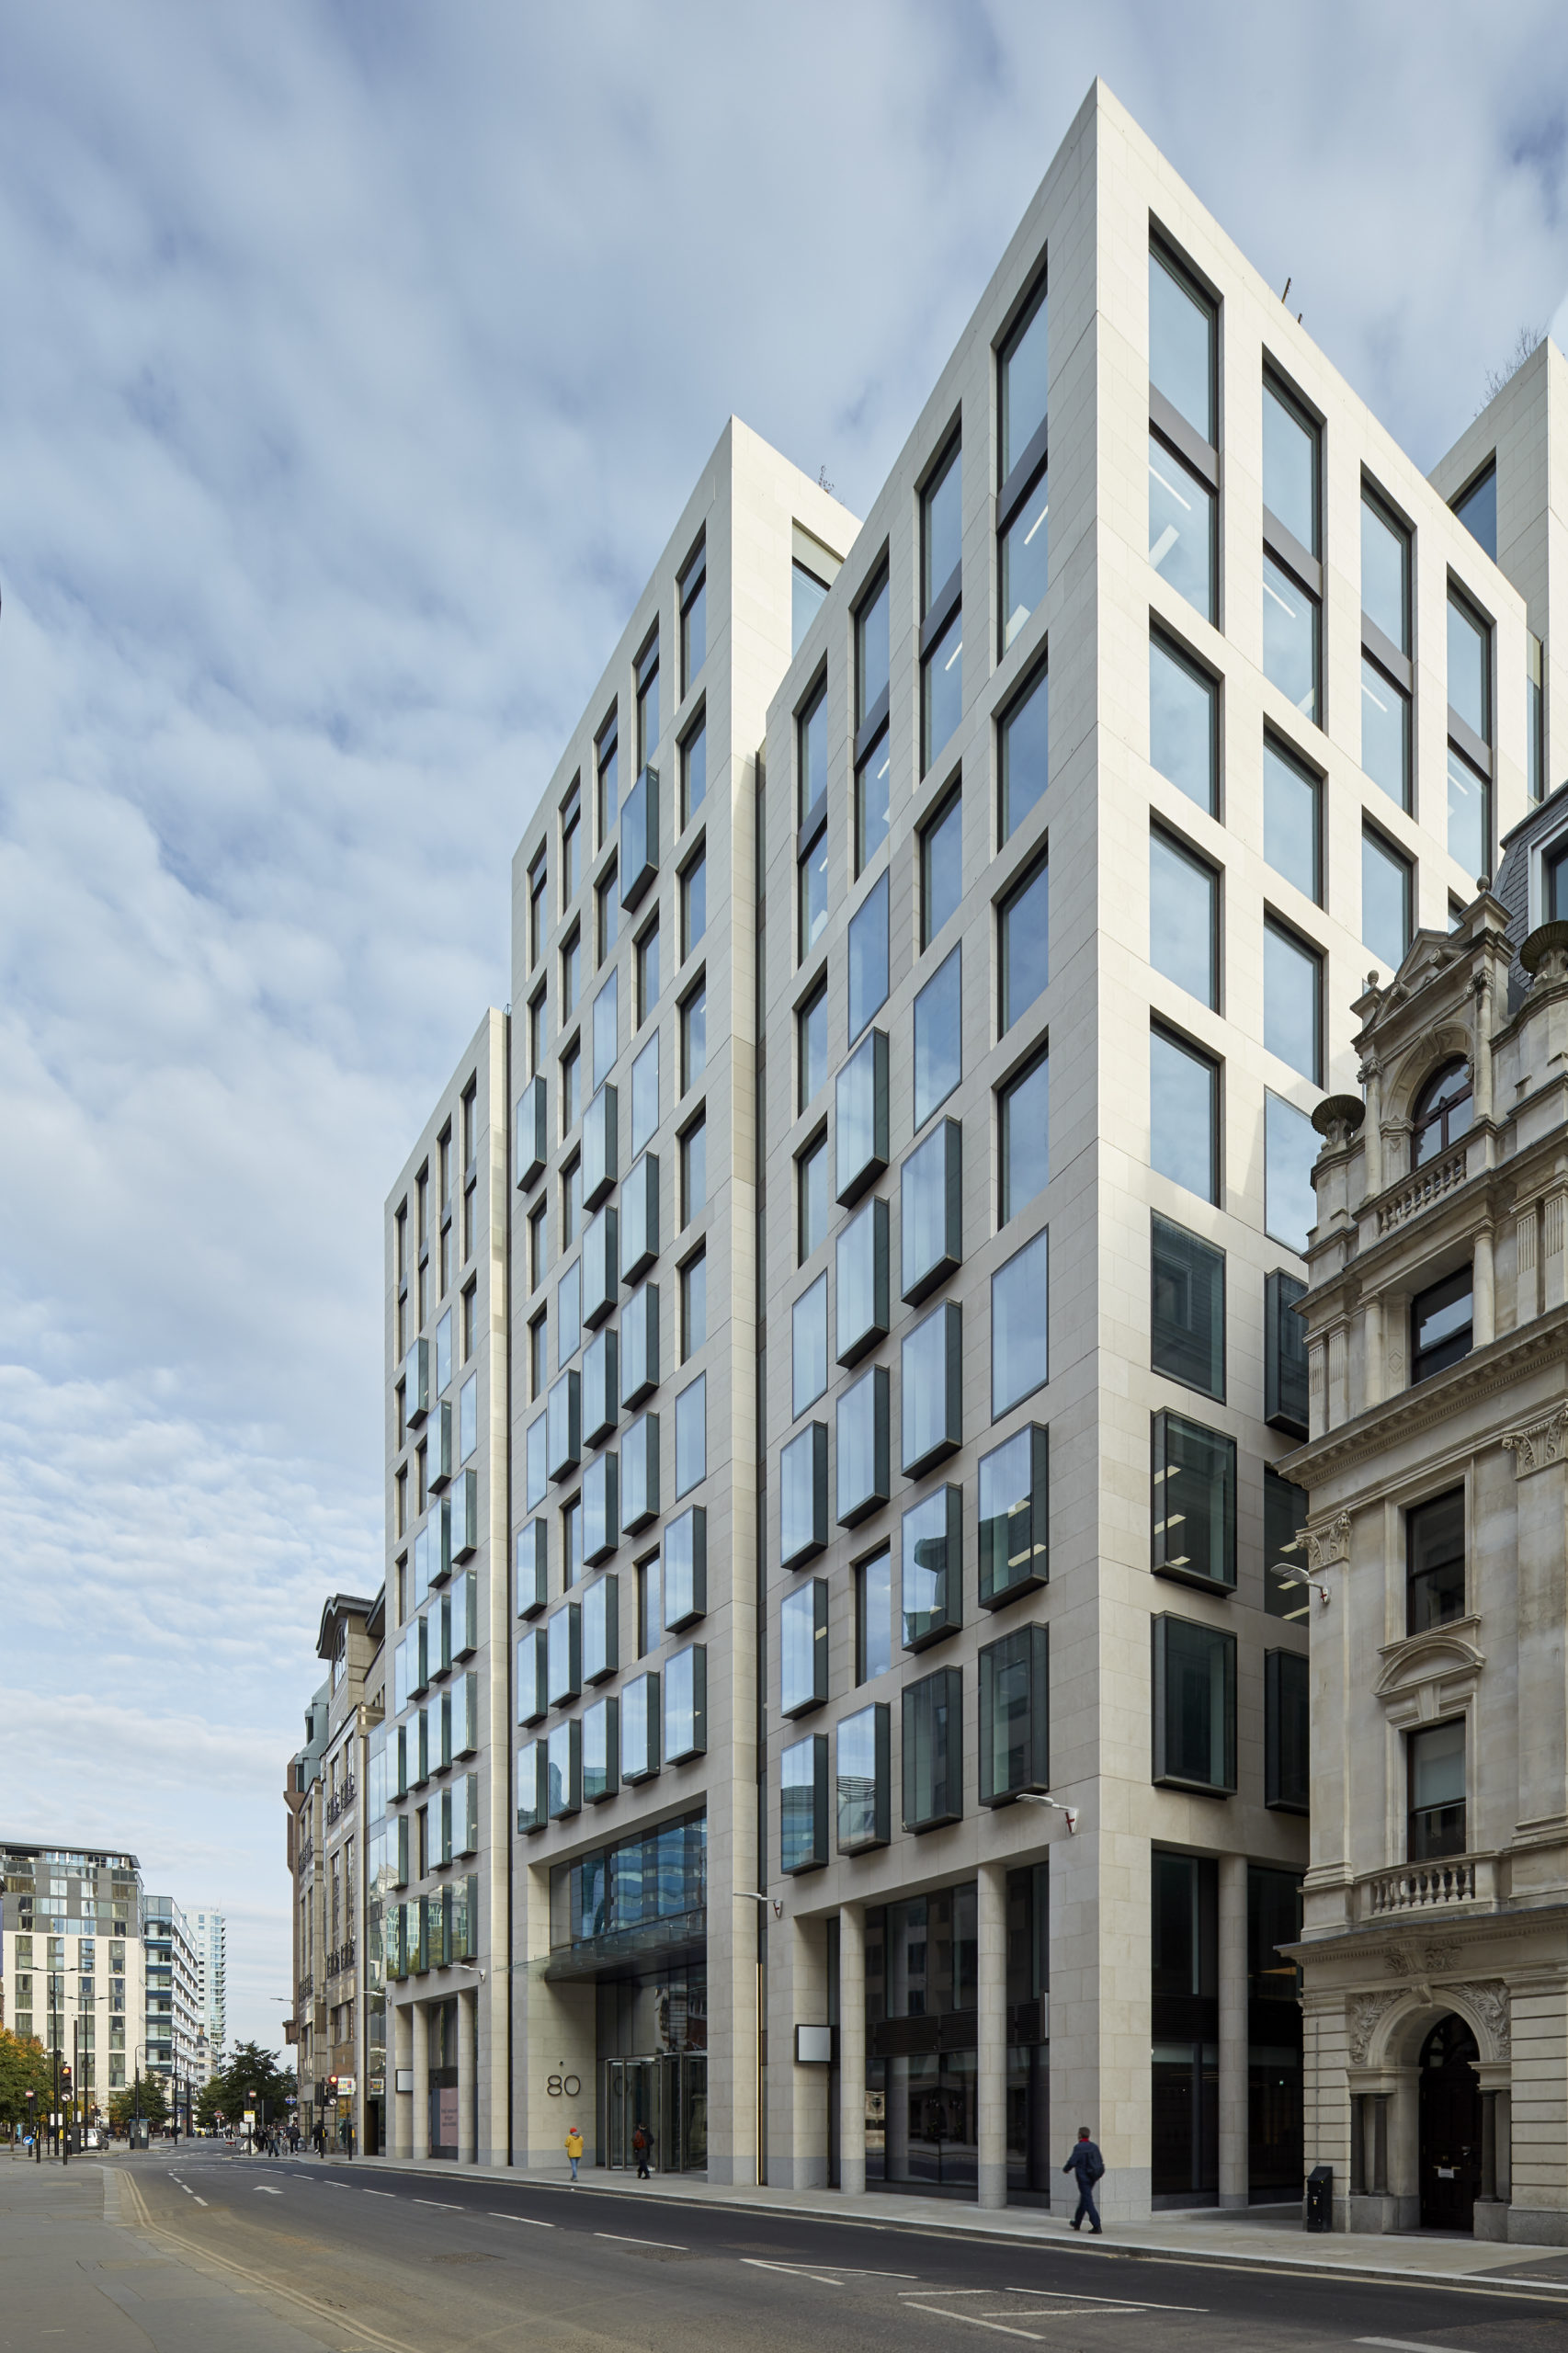 £100m development loan secured for 80 Fenchurch Street